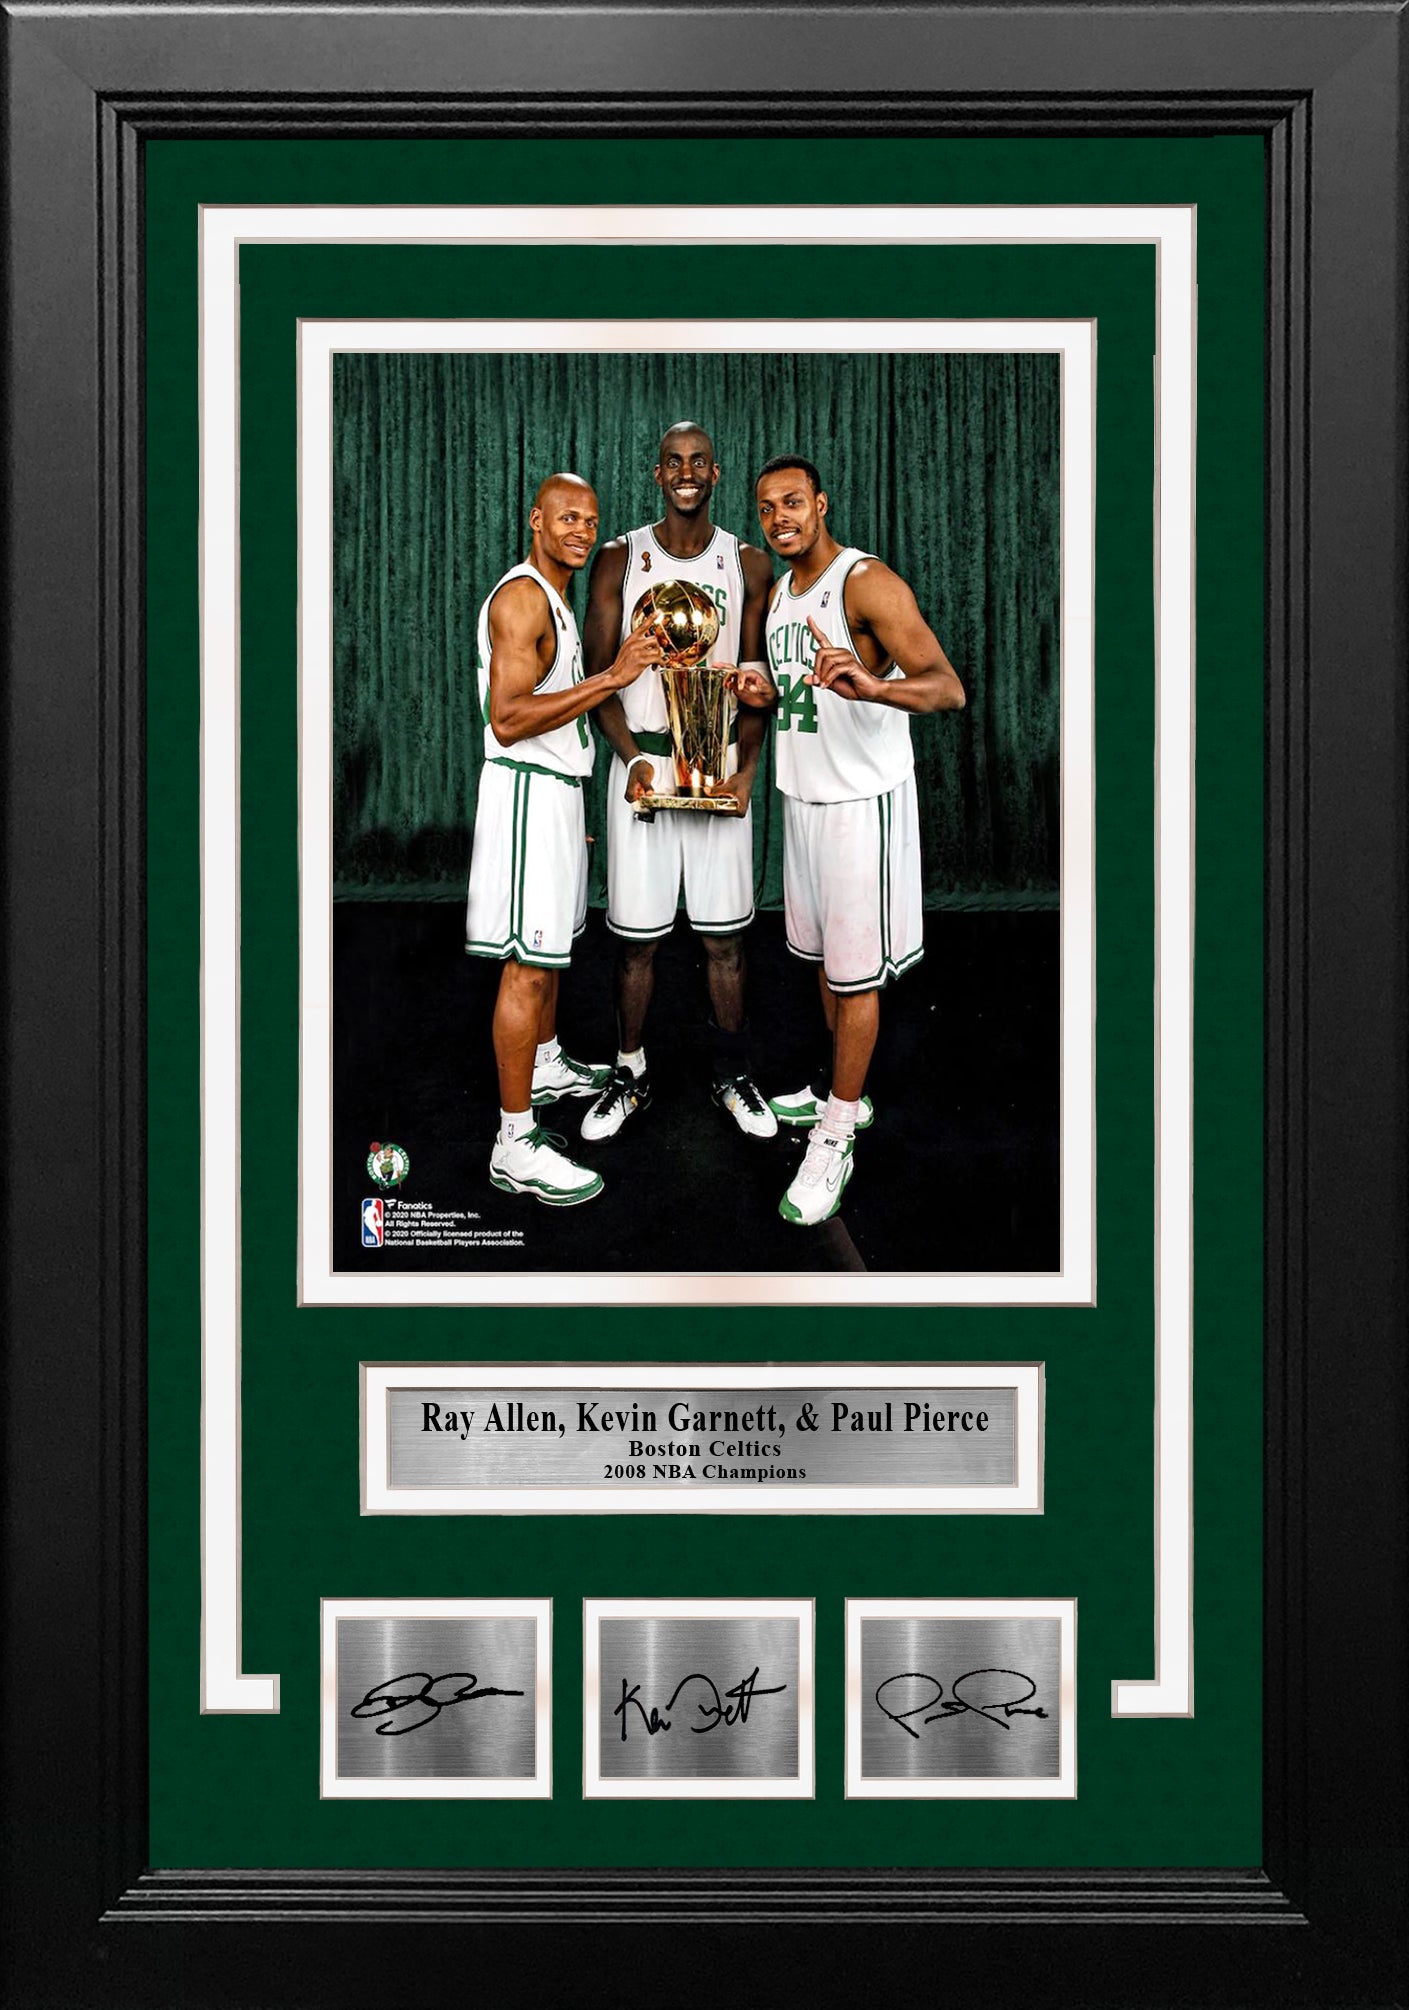 Ray Allen, Kevin Garnett, & Paul Pierce Boston Celtics 8x10 Framed Photo with Engraved Autographs - Dynasty Sports & Framing 